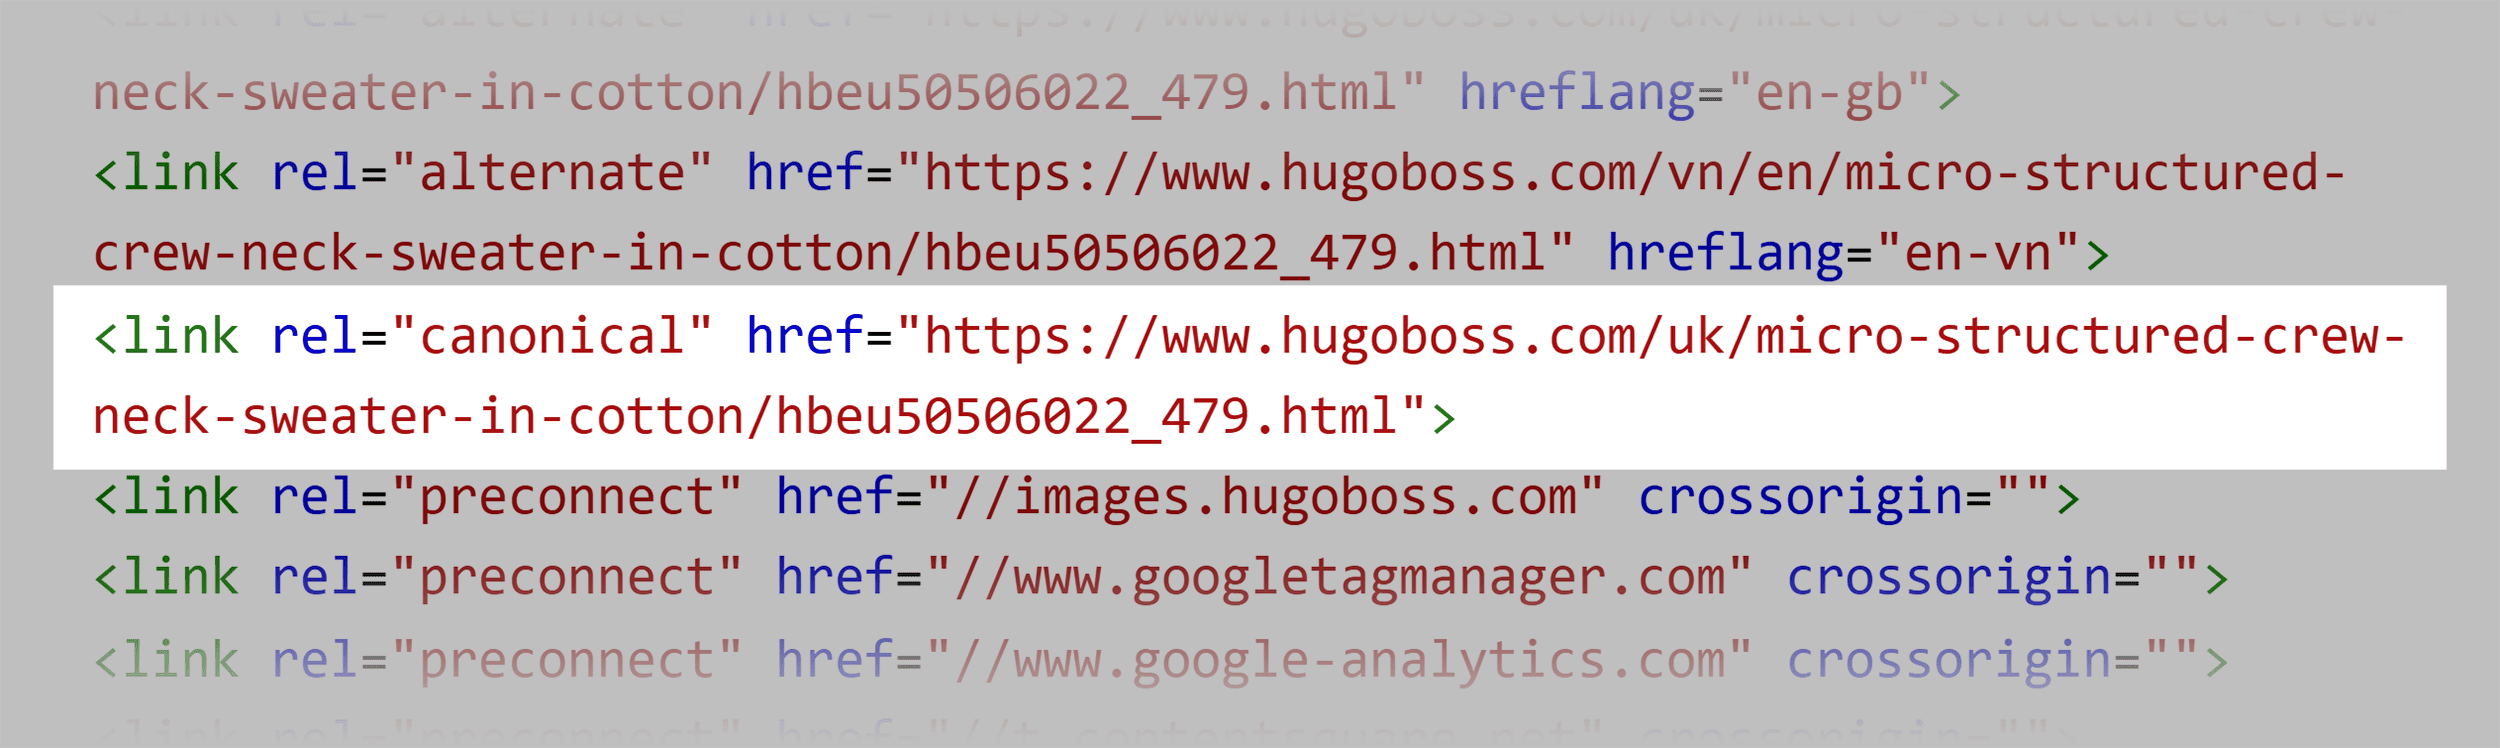 Hugo Boss – Canonical link